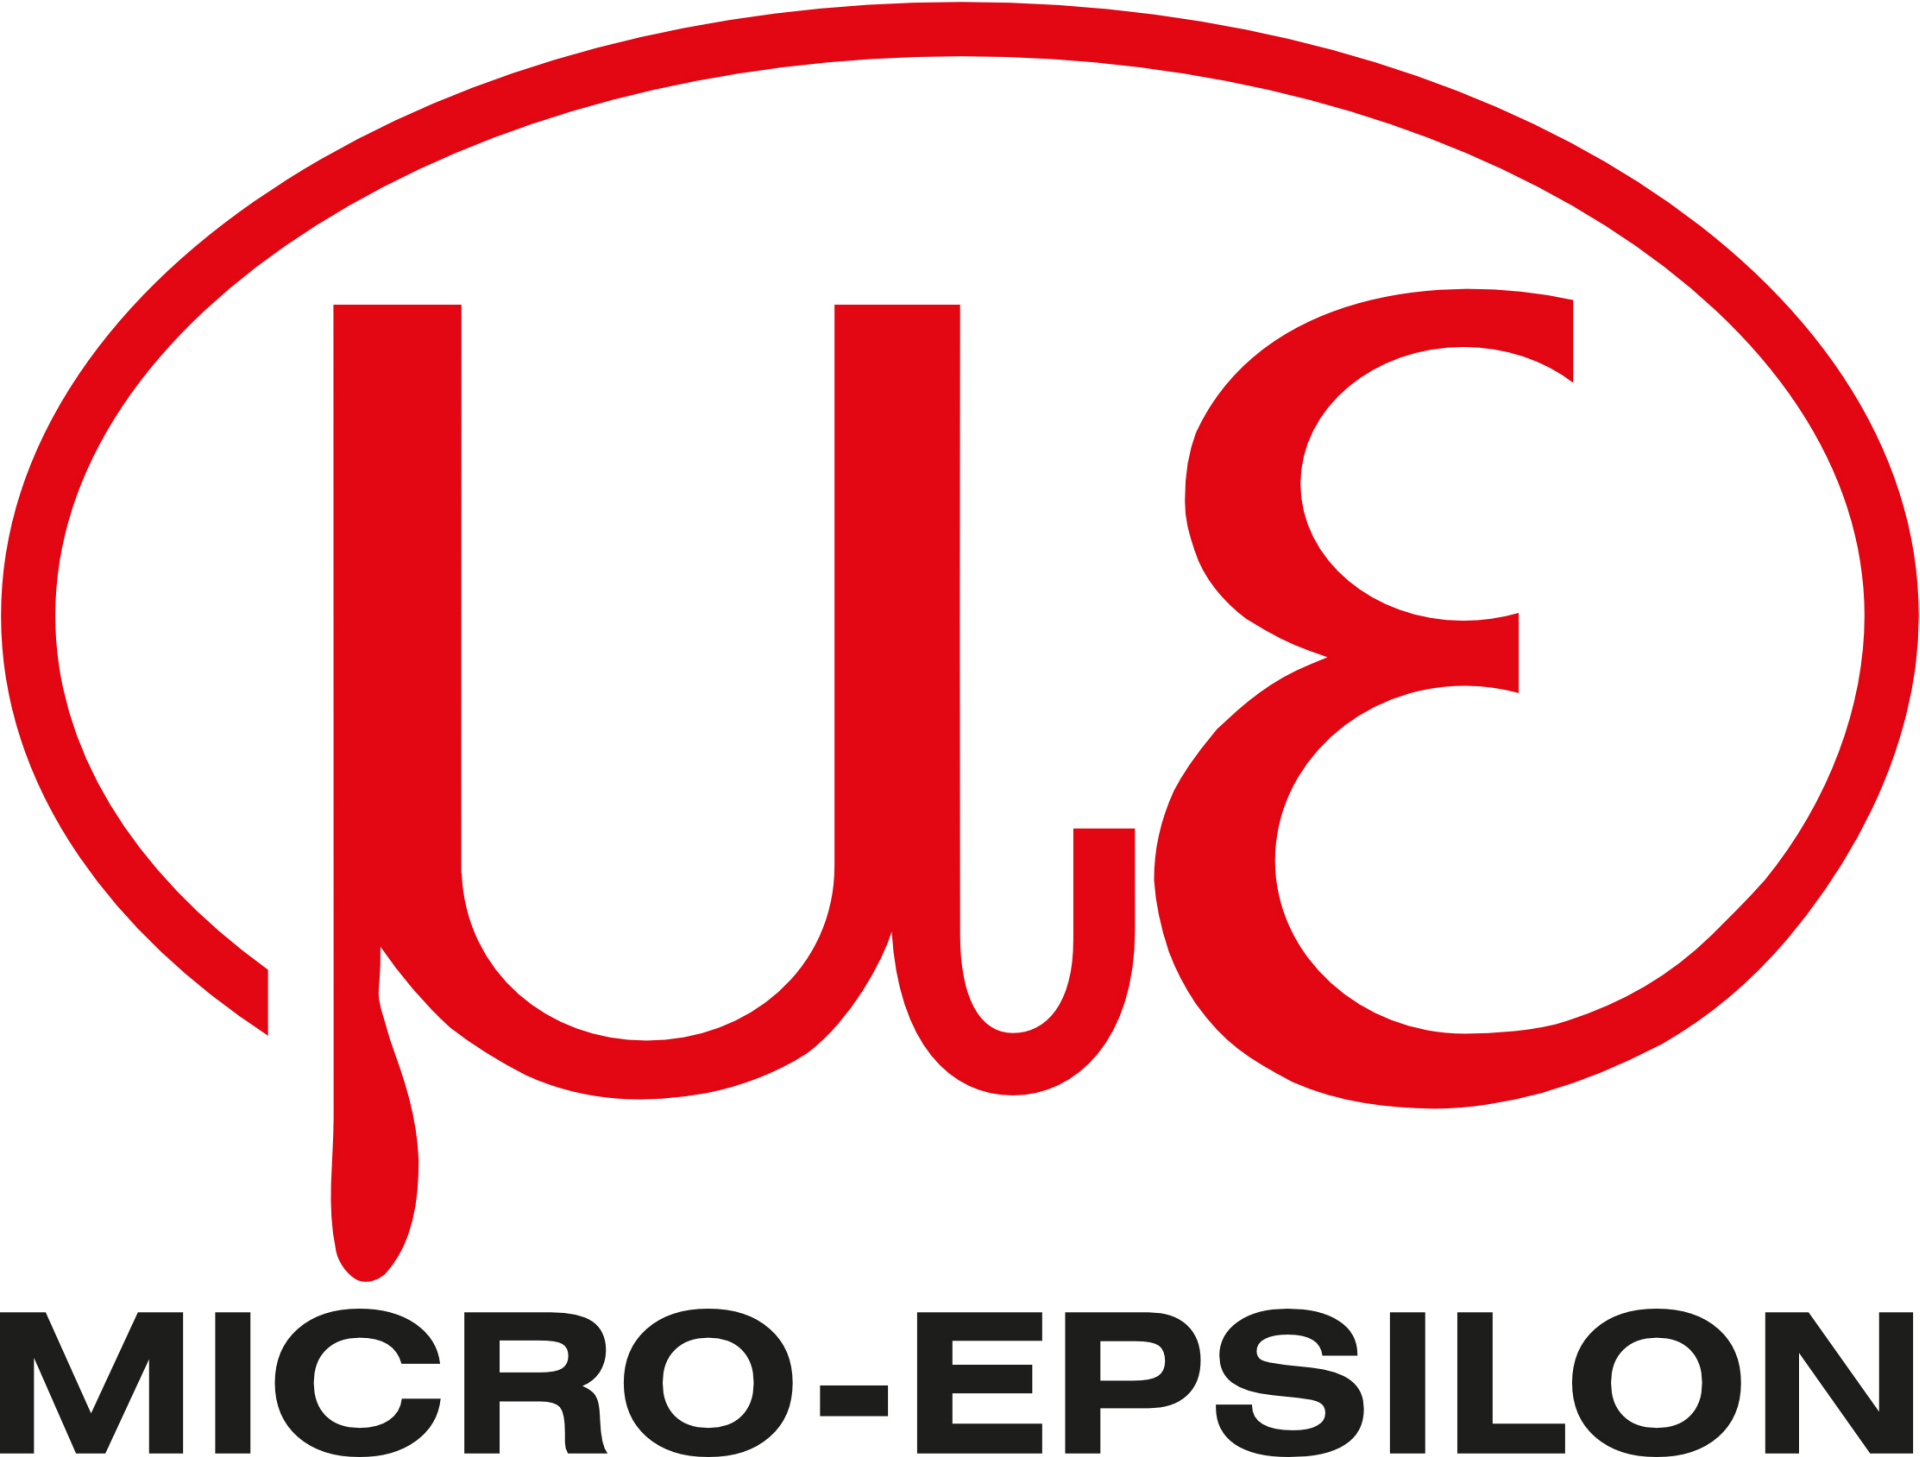 MICRO-EPSILON Messtechnik
GmbH & Co. KG